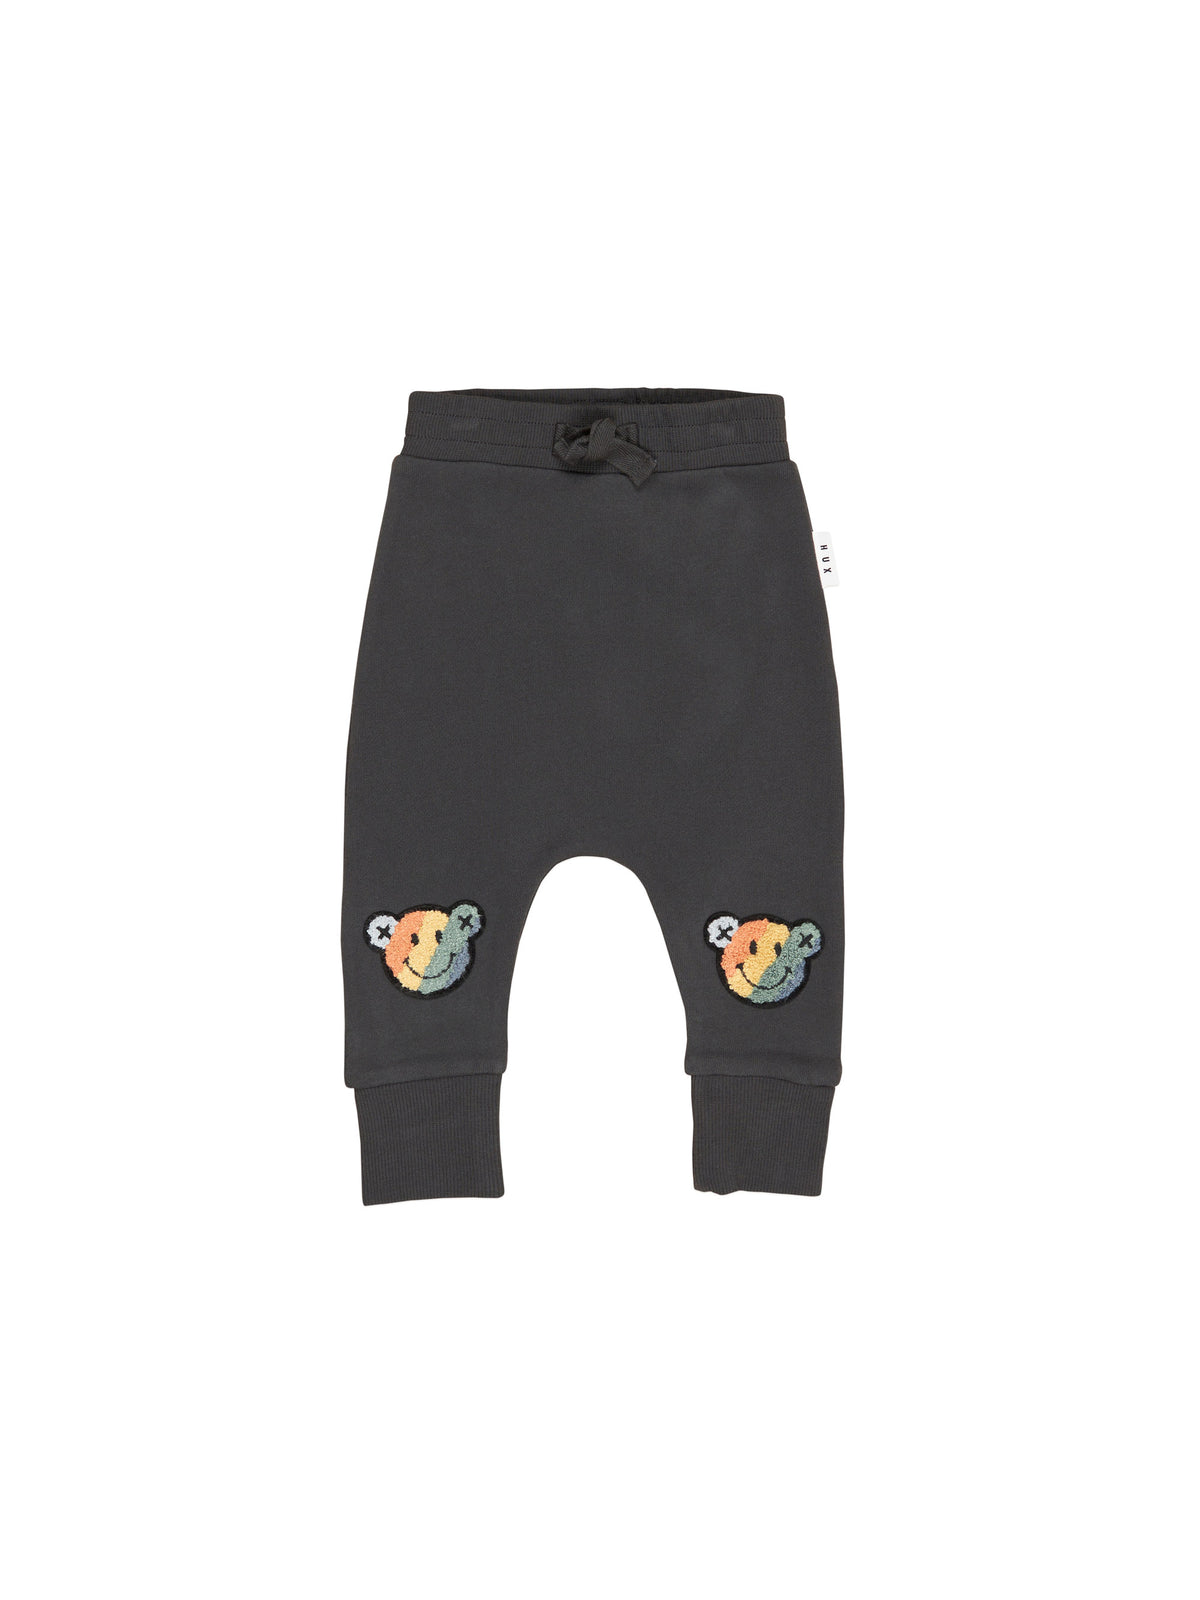 Smiley Rainbow Drop Crotch Pant || Soft Black